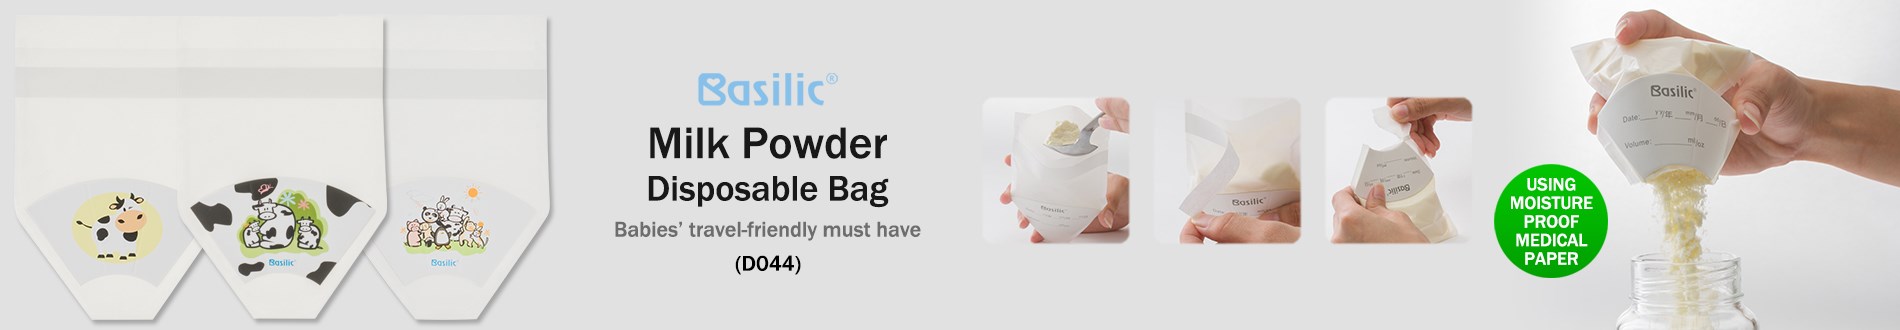 Milk powder disposable bag (D044)